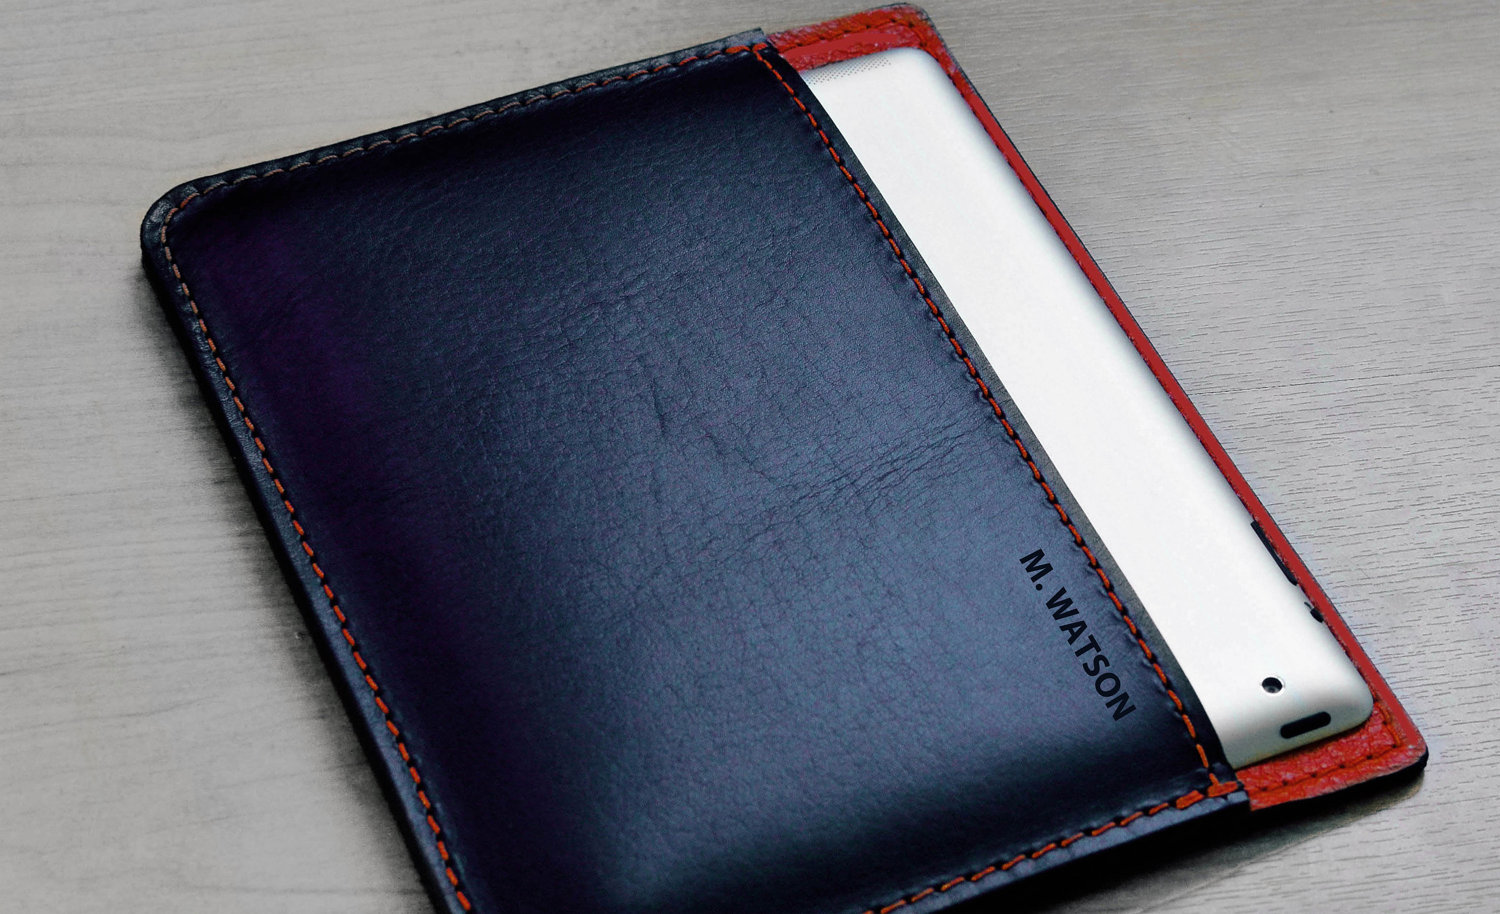 Louis Vuitton new iPad sleeve? Other luxury designer sleeves